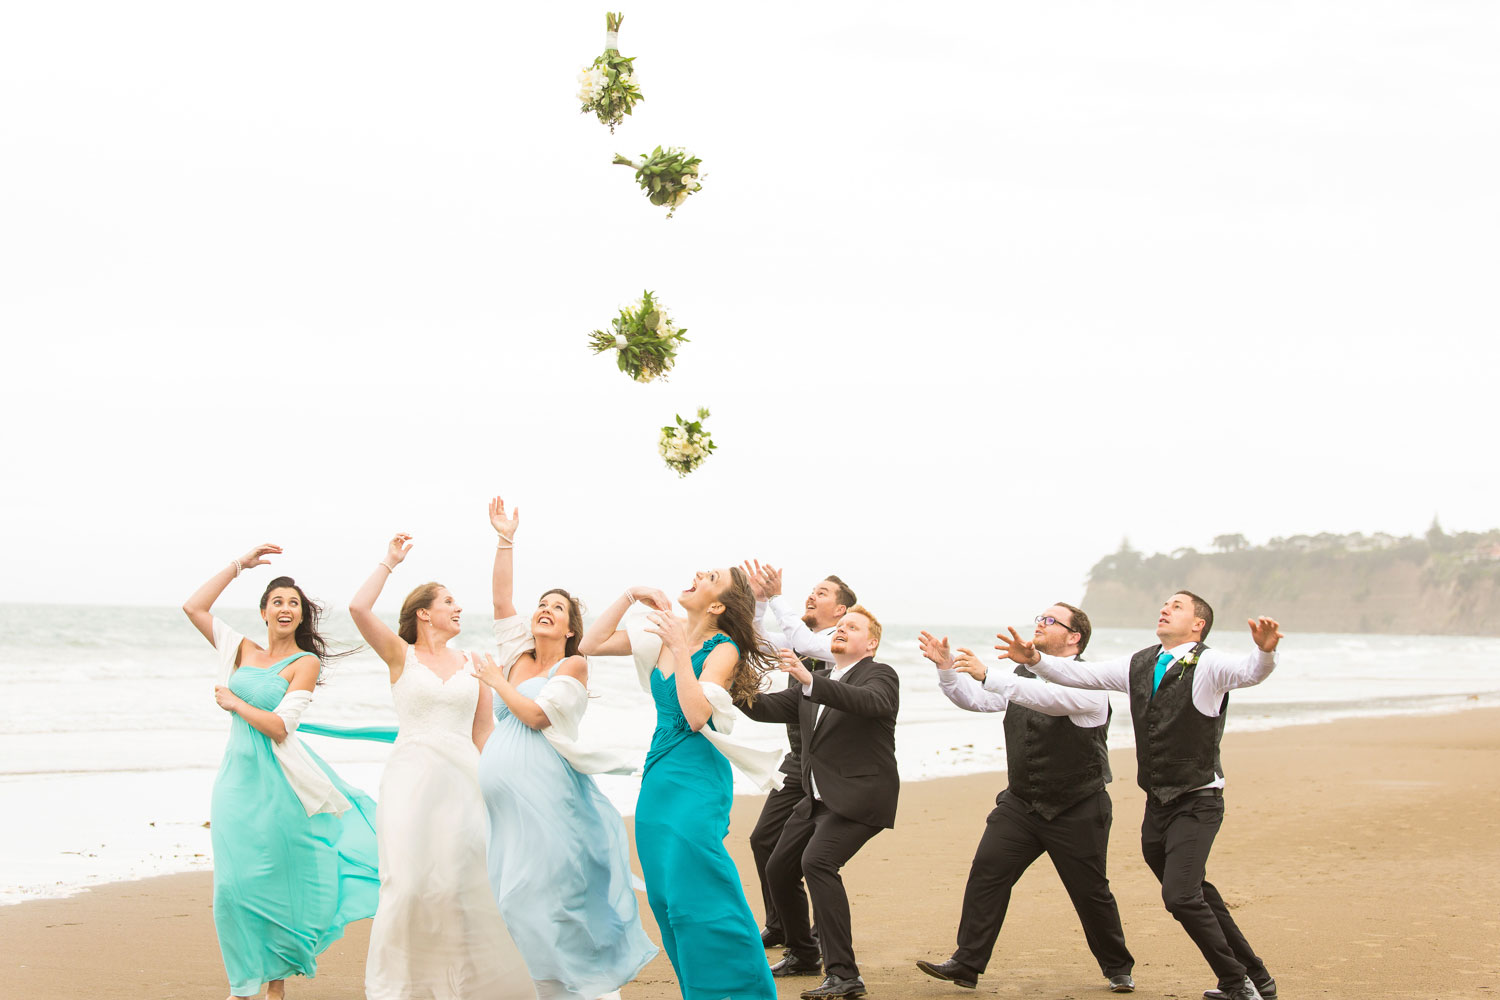 auckland wedding bridal party bouquet toss on beach